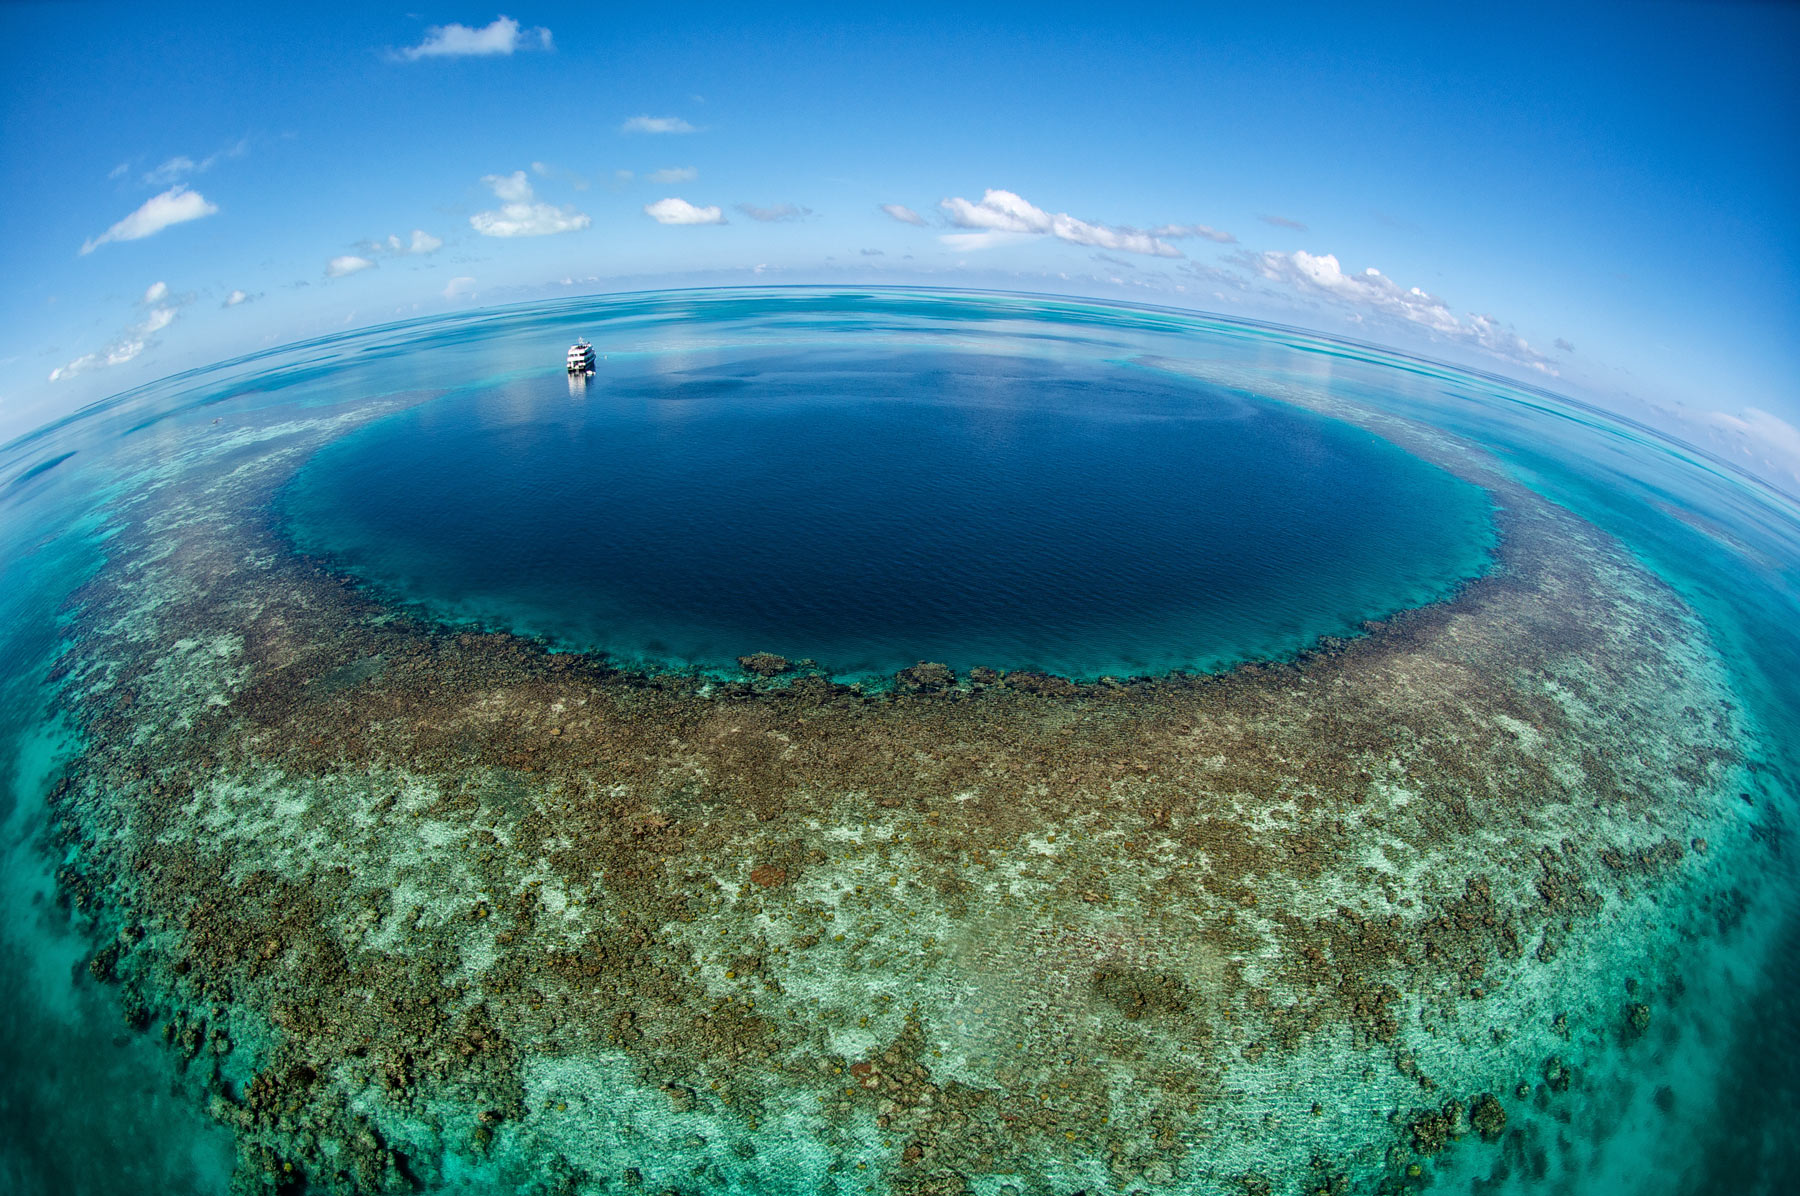 Выберите самый большой океан. Большая голубая дыра, Лайтхаус-риф. Большая голубая дыра Юкатан. Большая голубая дыра Белиз Центральная Америка. Блю Хоул голубая дыра.